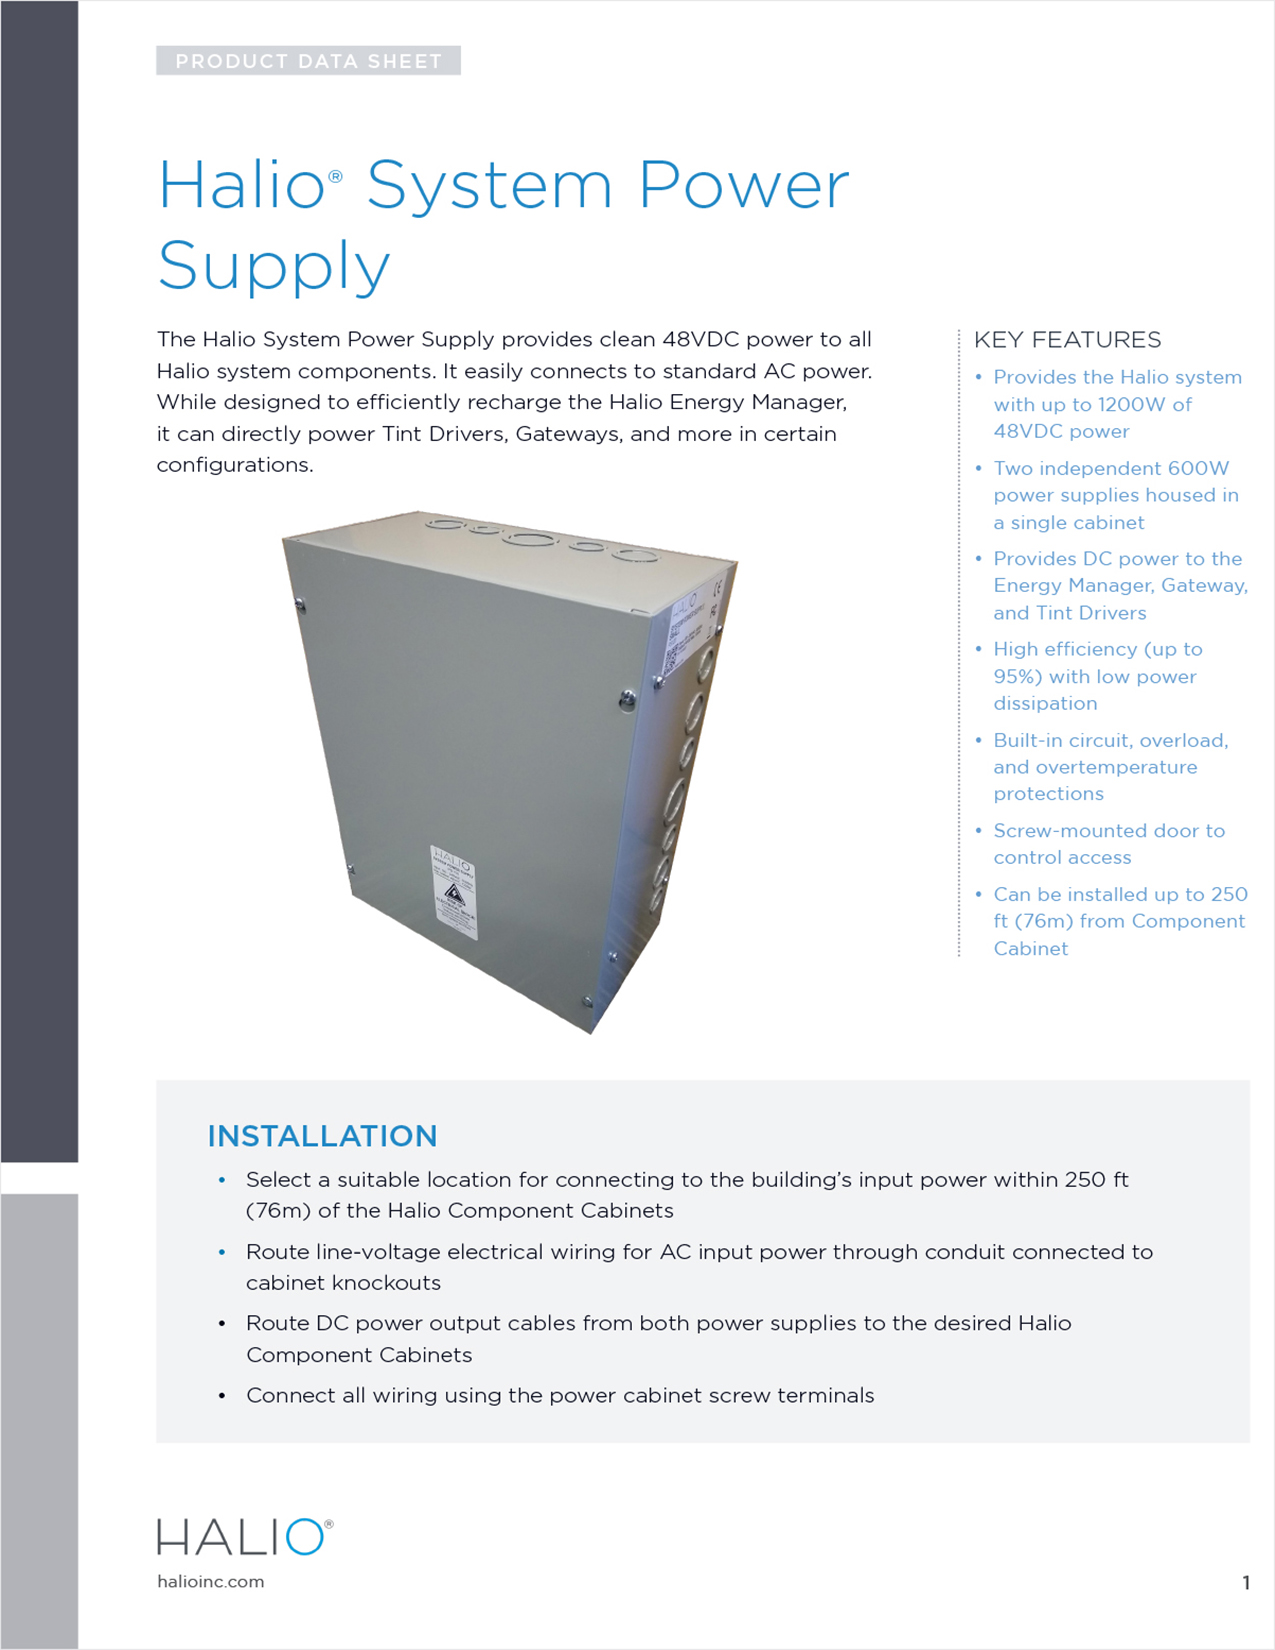 Halio® System Power Supply Data Sheet